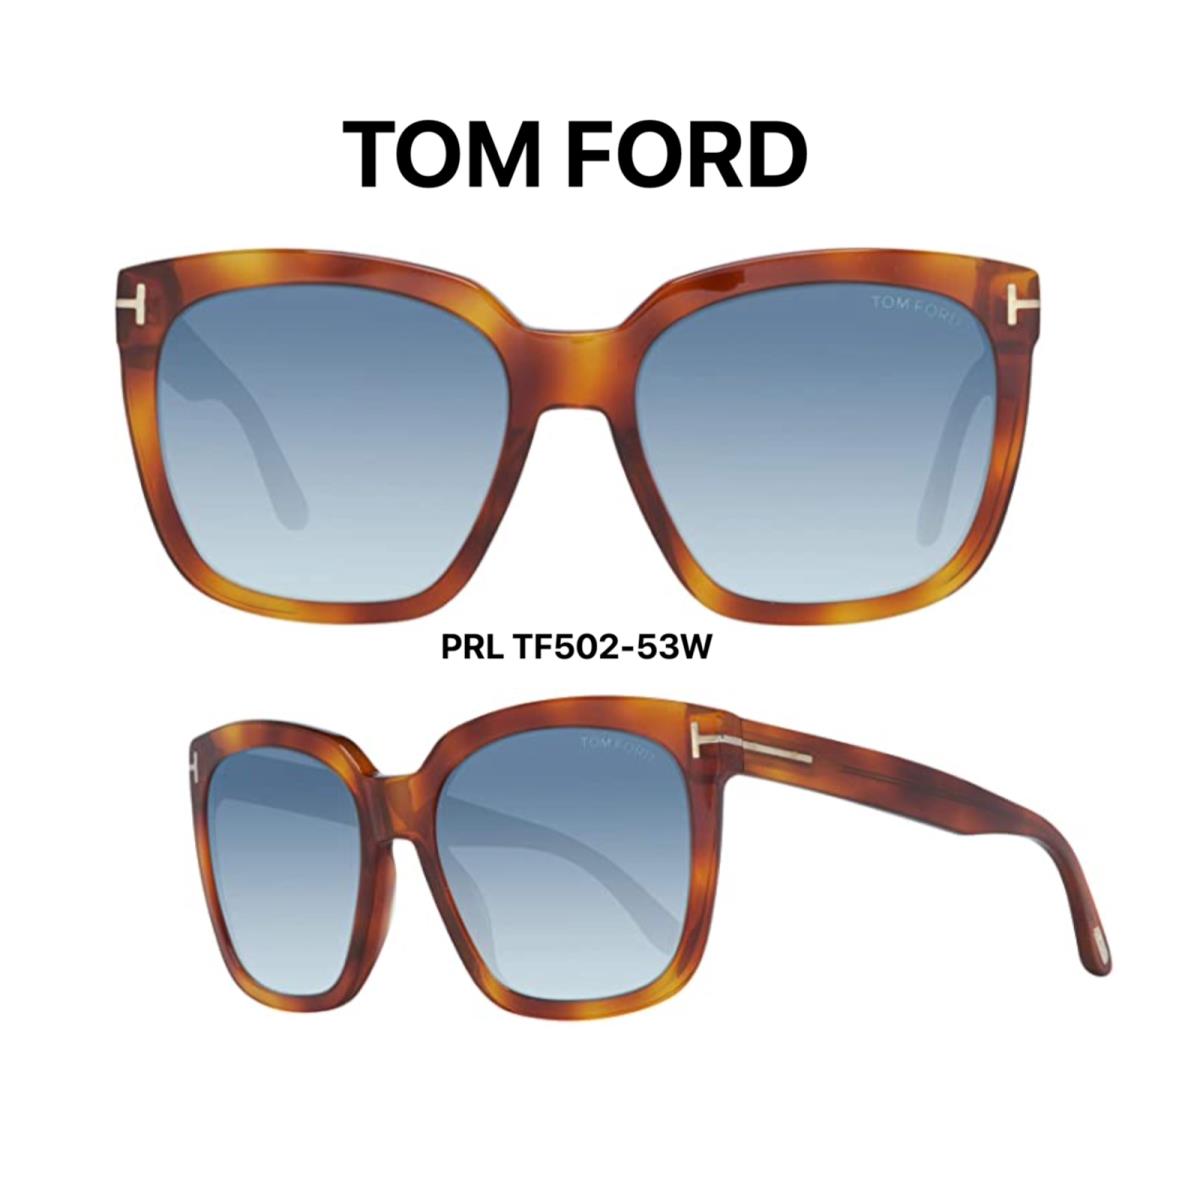 Tom Ford TF 502 53W Amarra Sunglasses Blonde Havana FT 502 53W